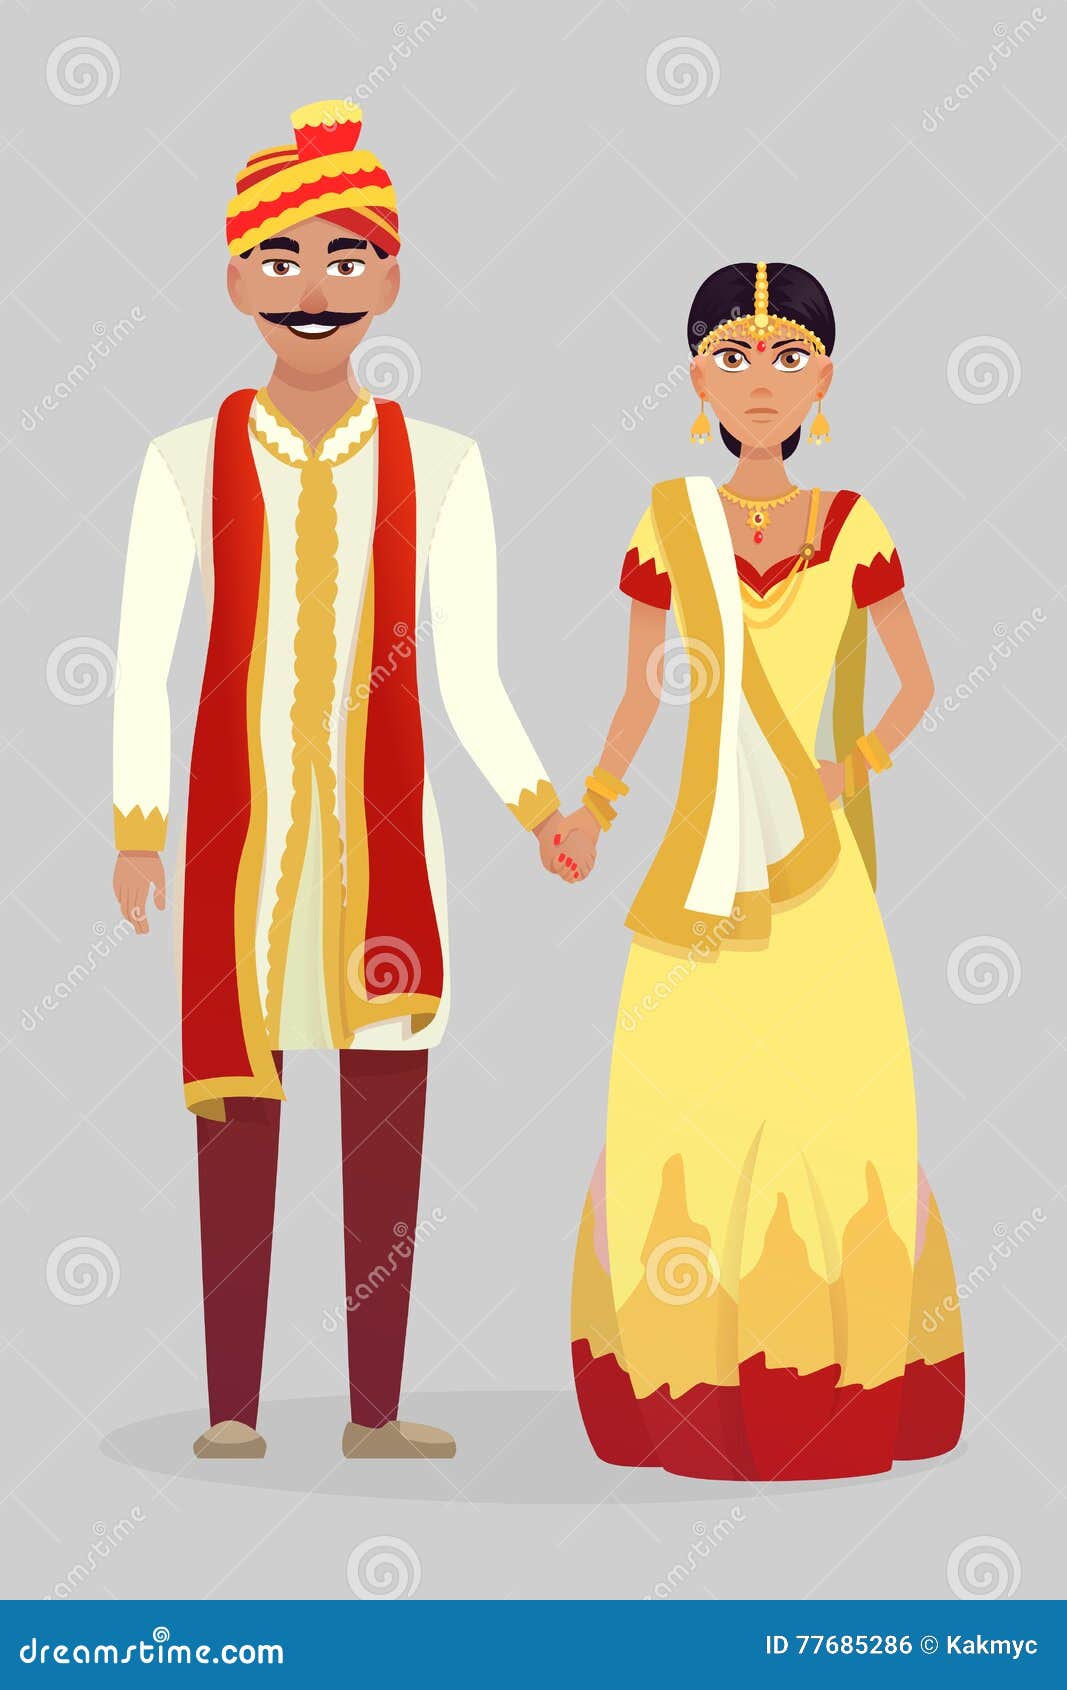 Cartoon Indian Wedding Couple Stock Vector Illustration Of